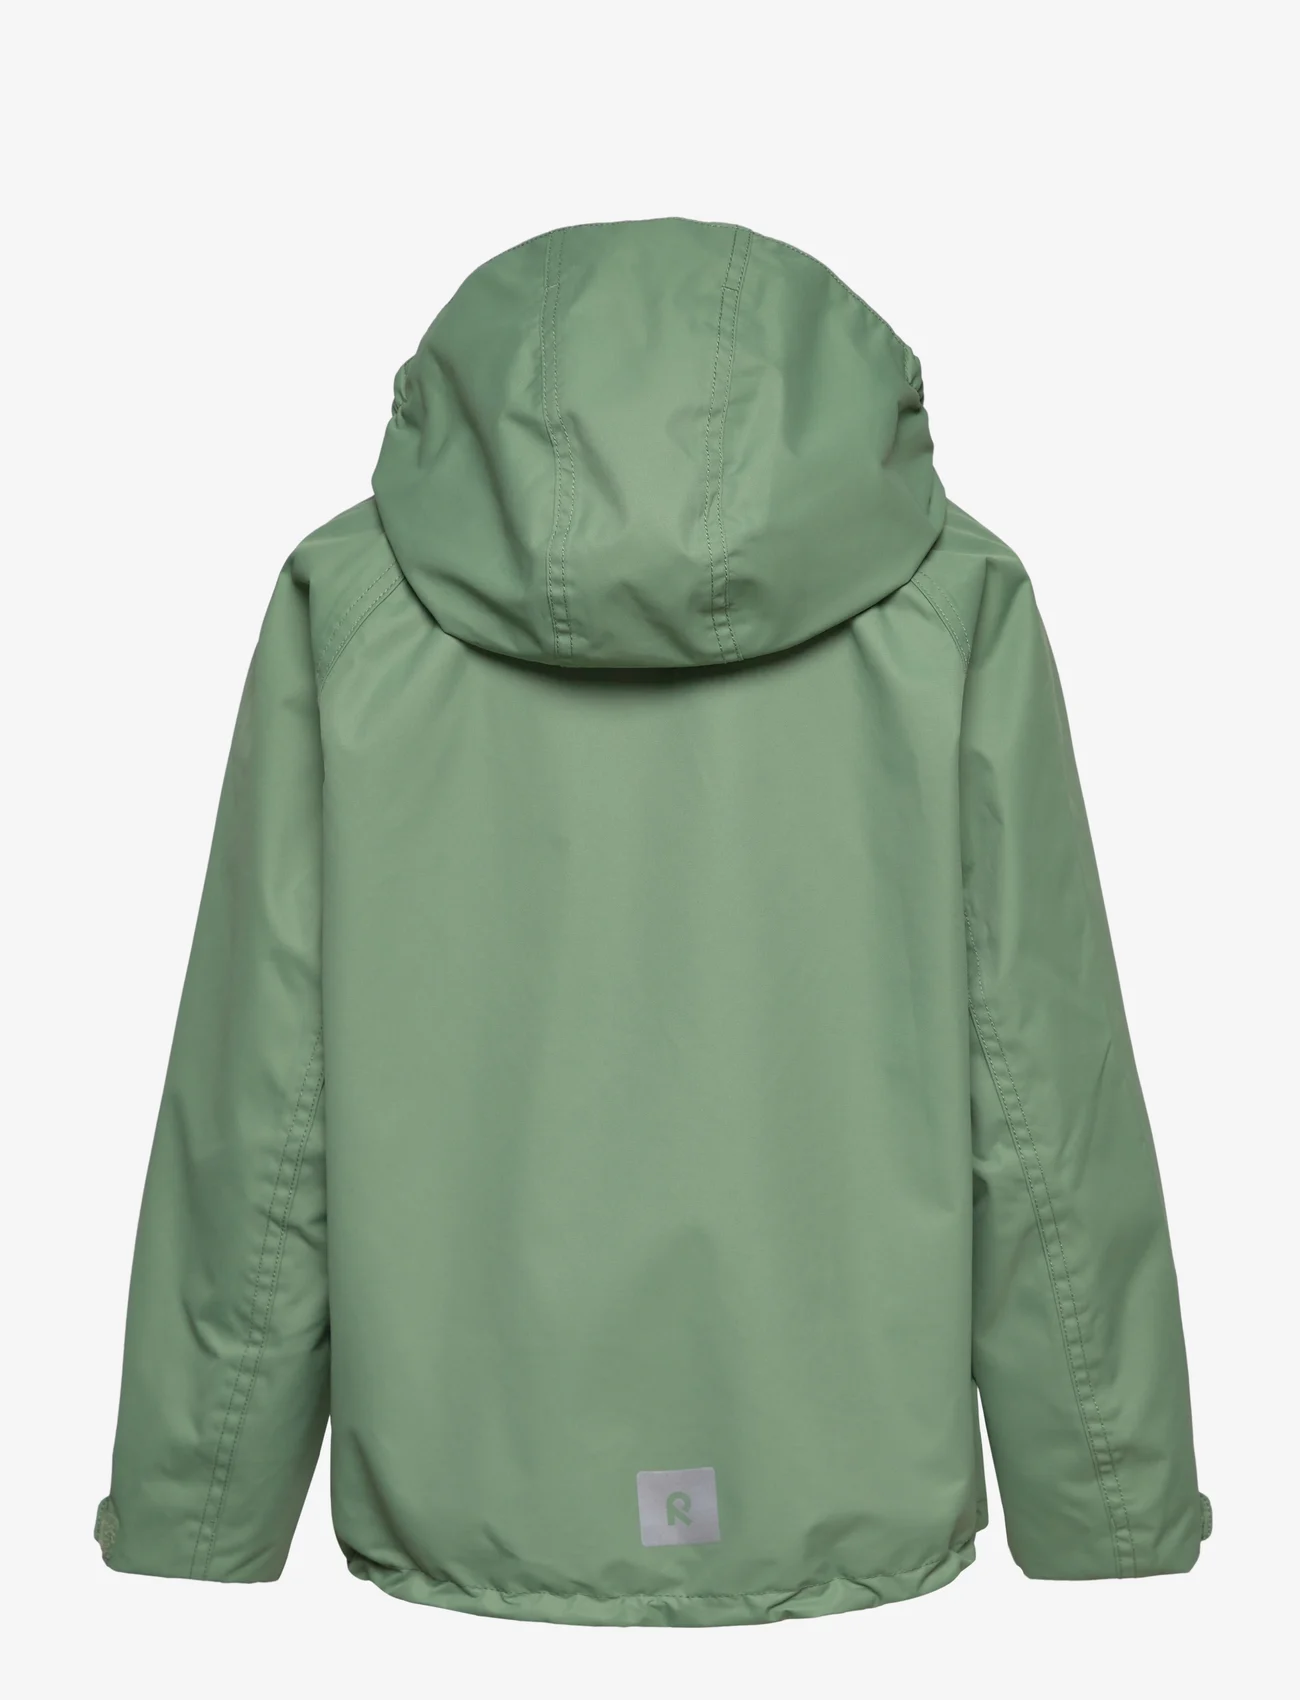 Reima - Reimatec jacket, Soutu - spring jackets - green clay - 1